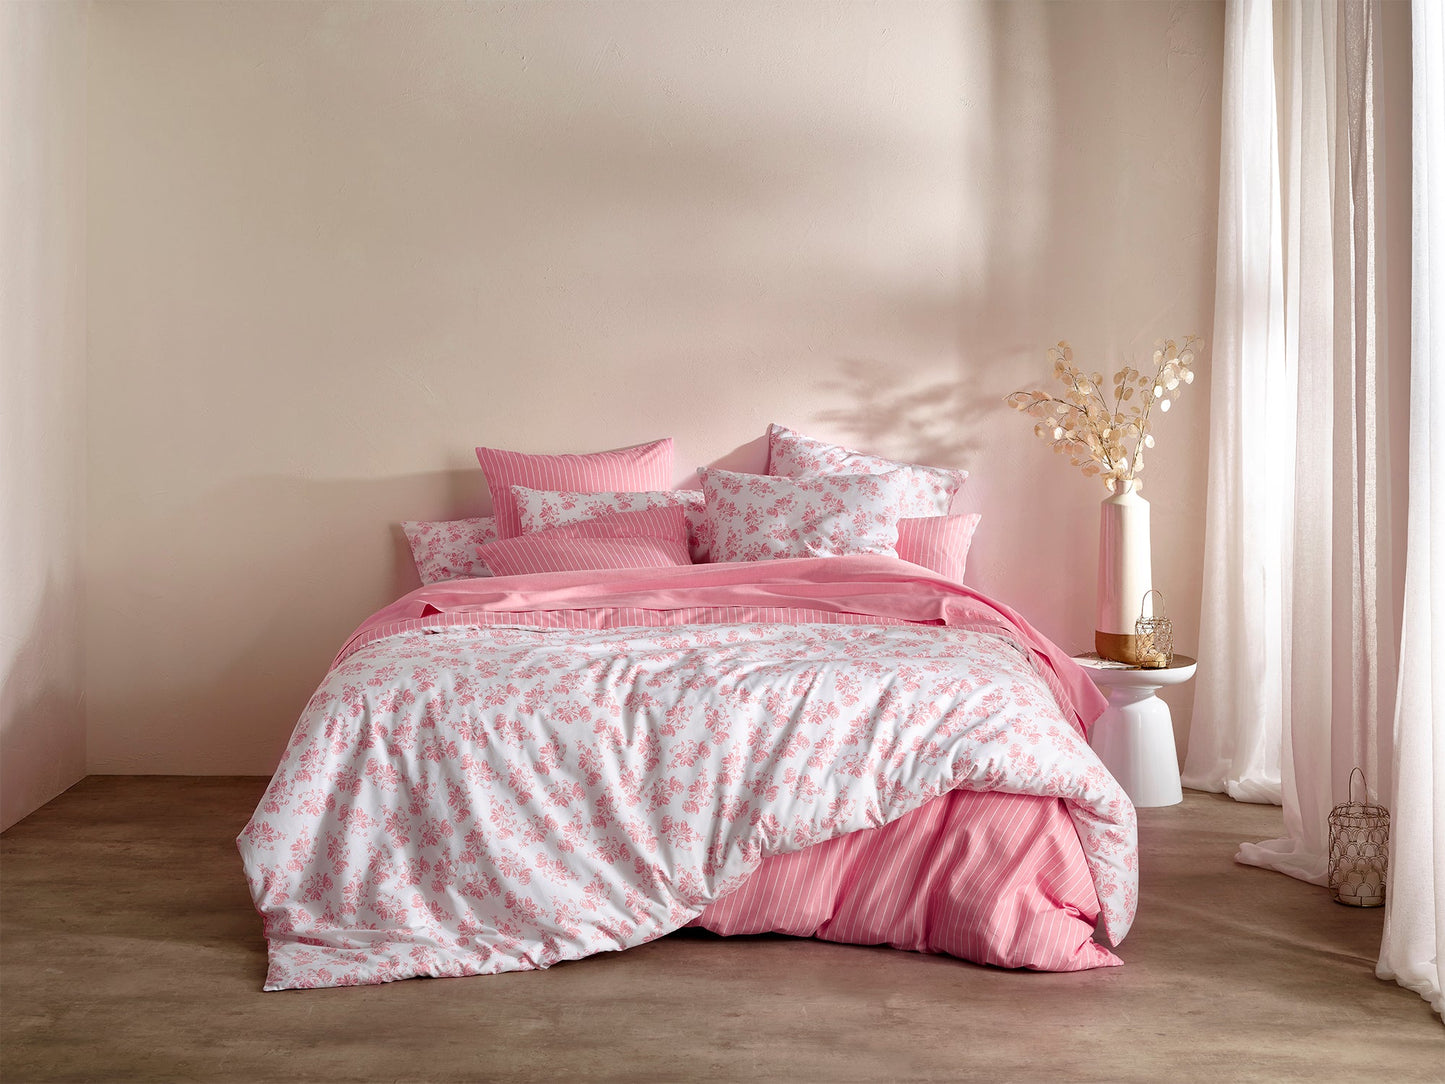 Duvet cover linen / cotton + 2 pillowcases - Roses pink